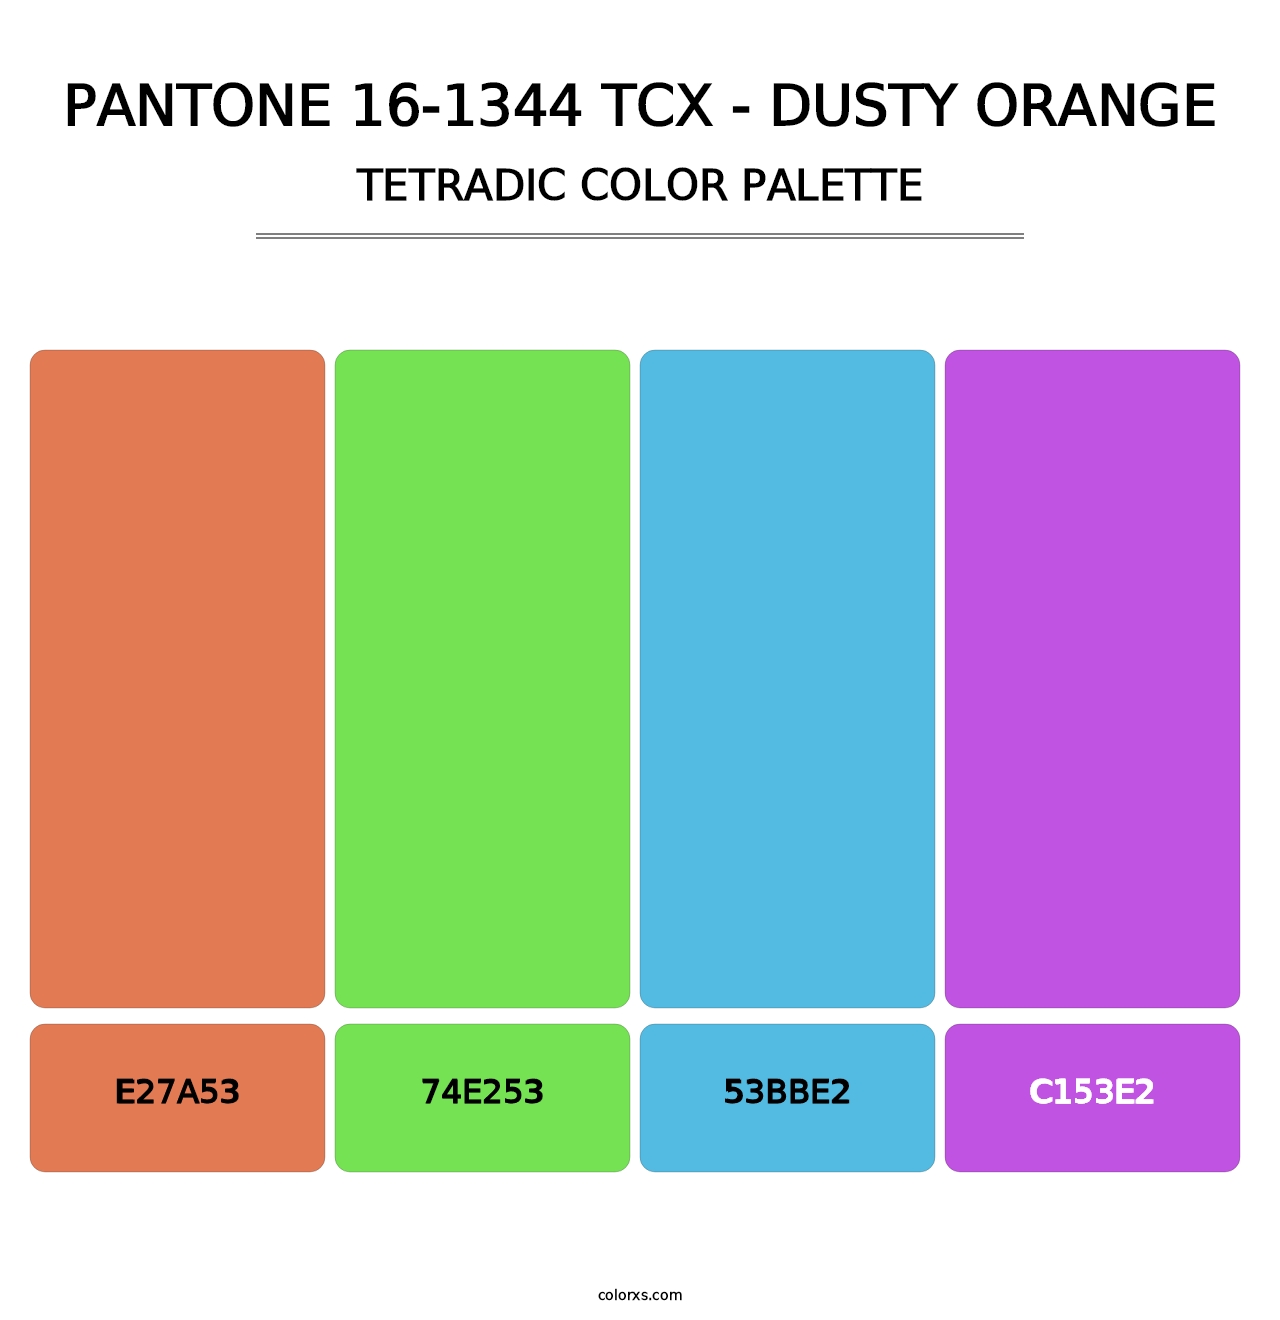 PANTONE 16-1344 TCX - Dusty Orange - Tetradic Color Palette